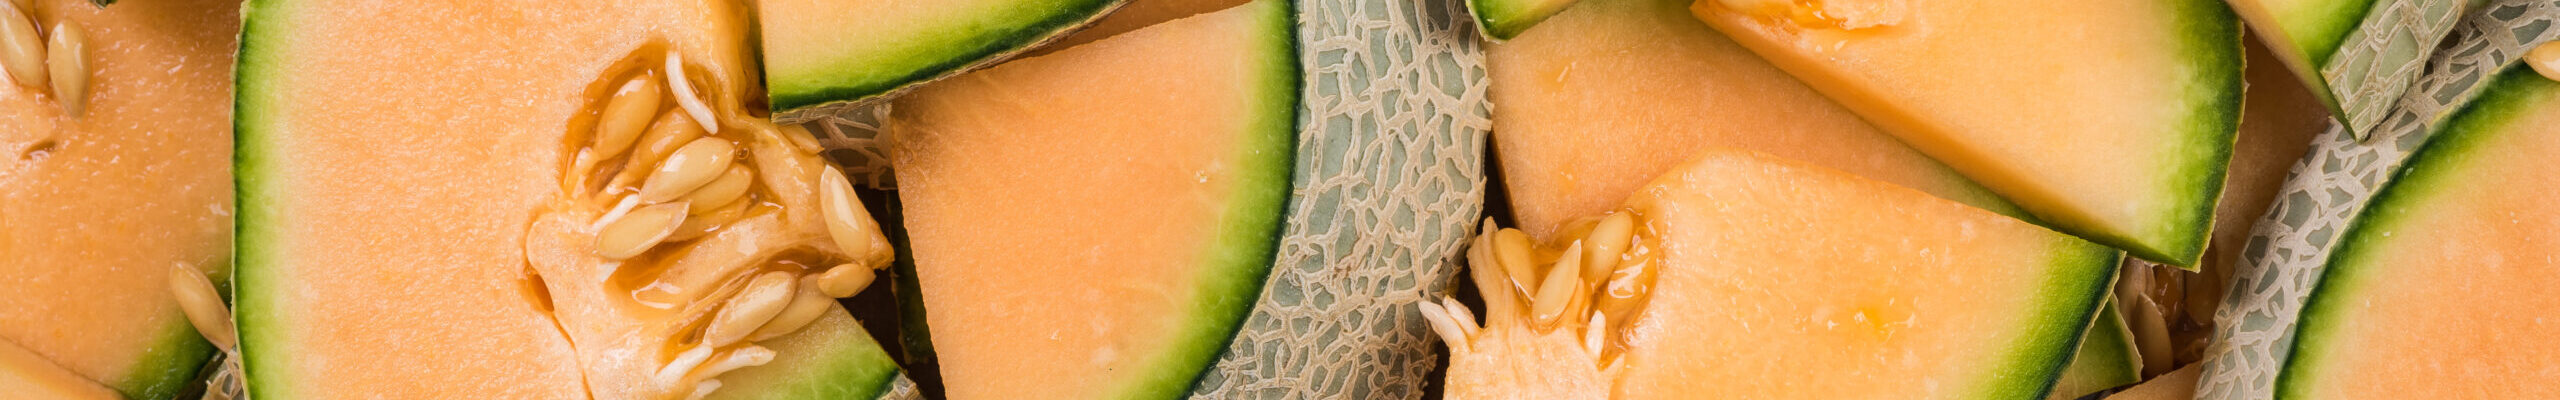 Cantaloupe melon slices, full frame food background.